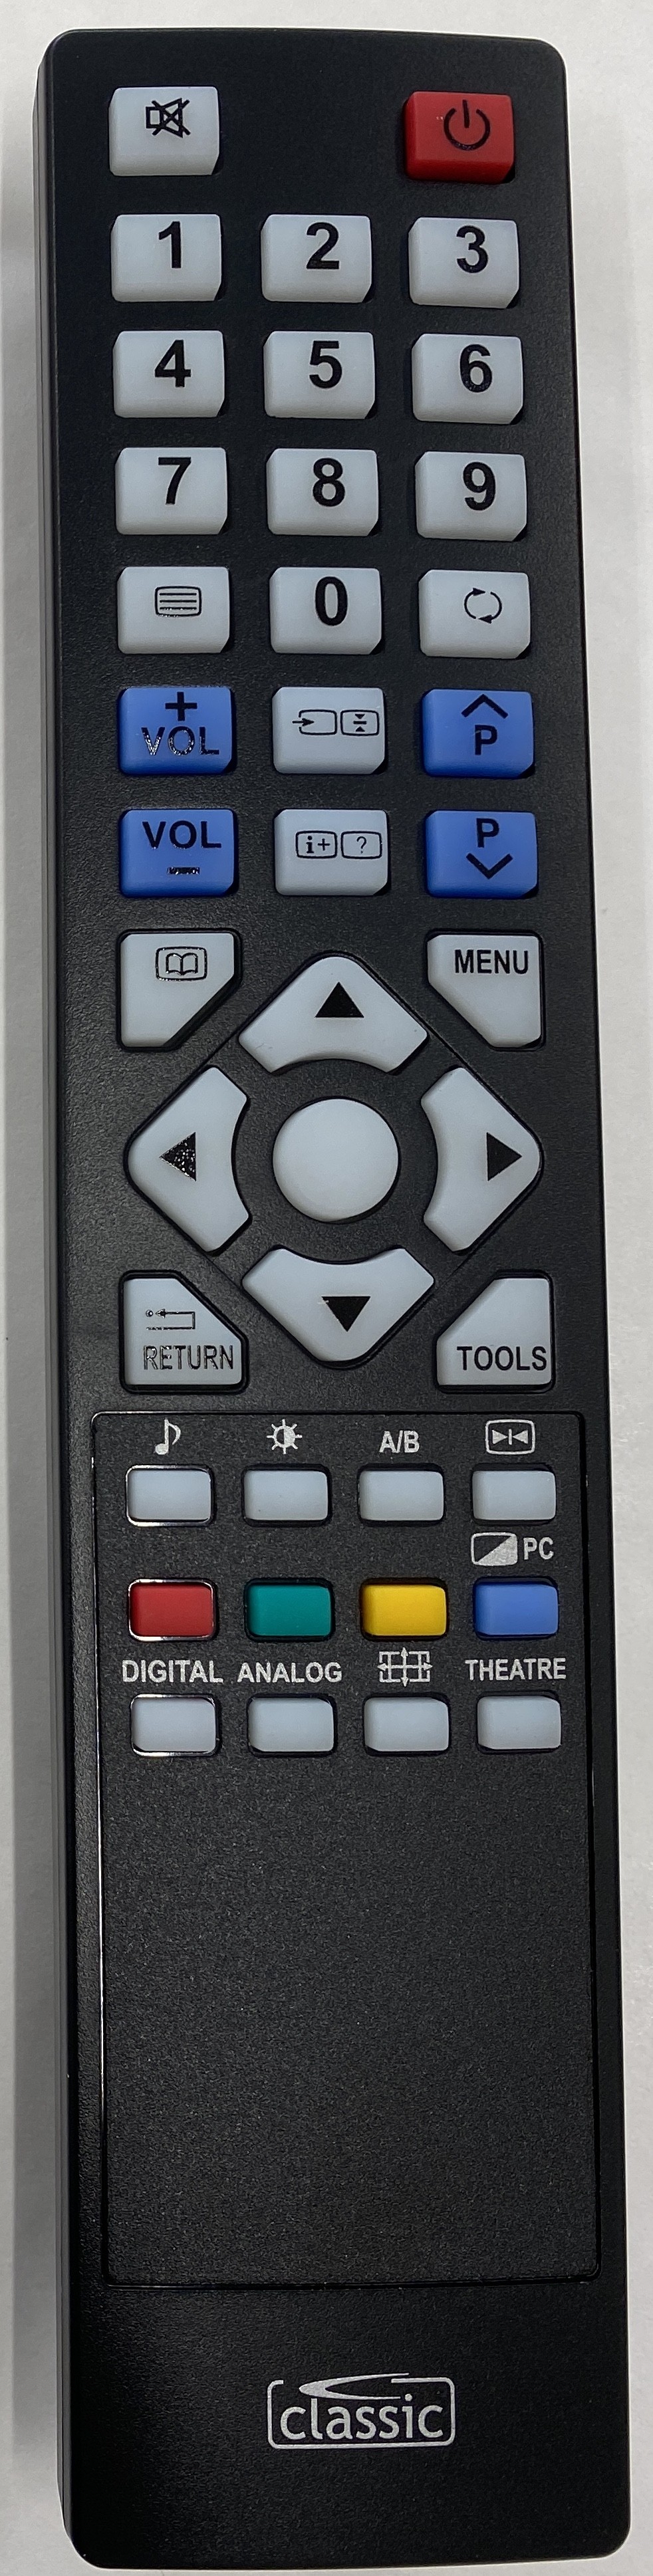 SONY RM-ED005 Remote Control Alternative